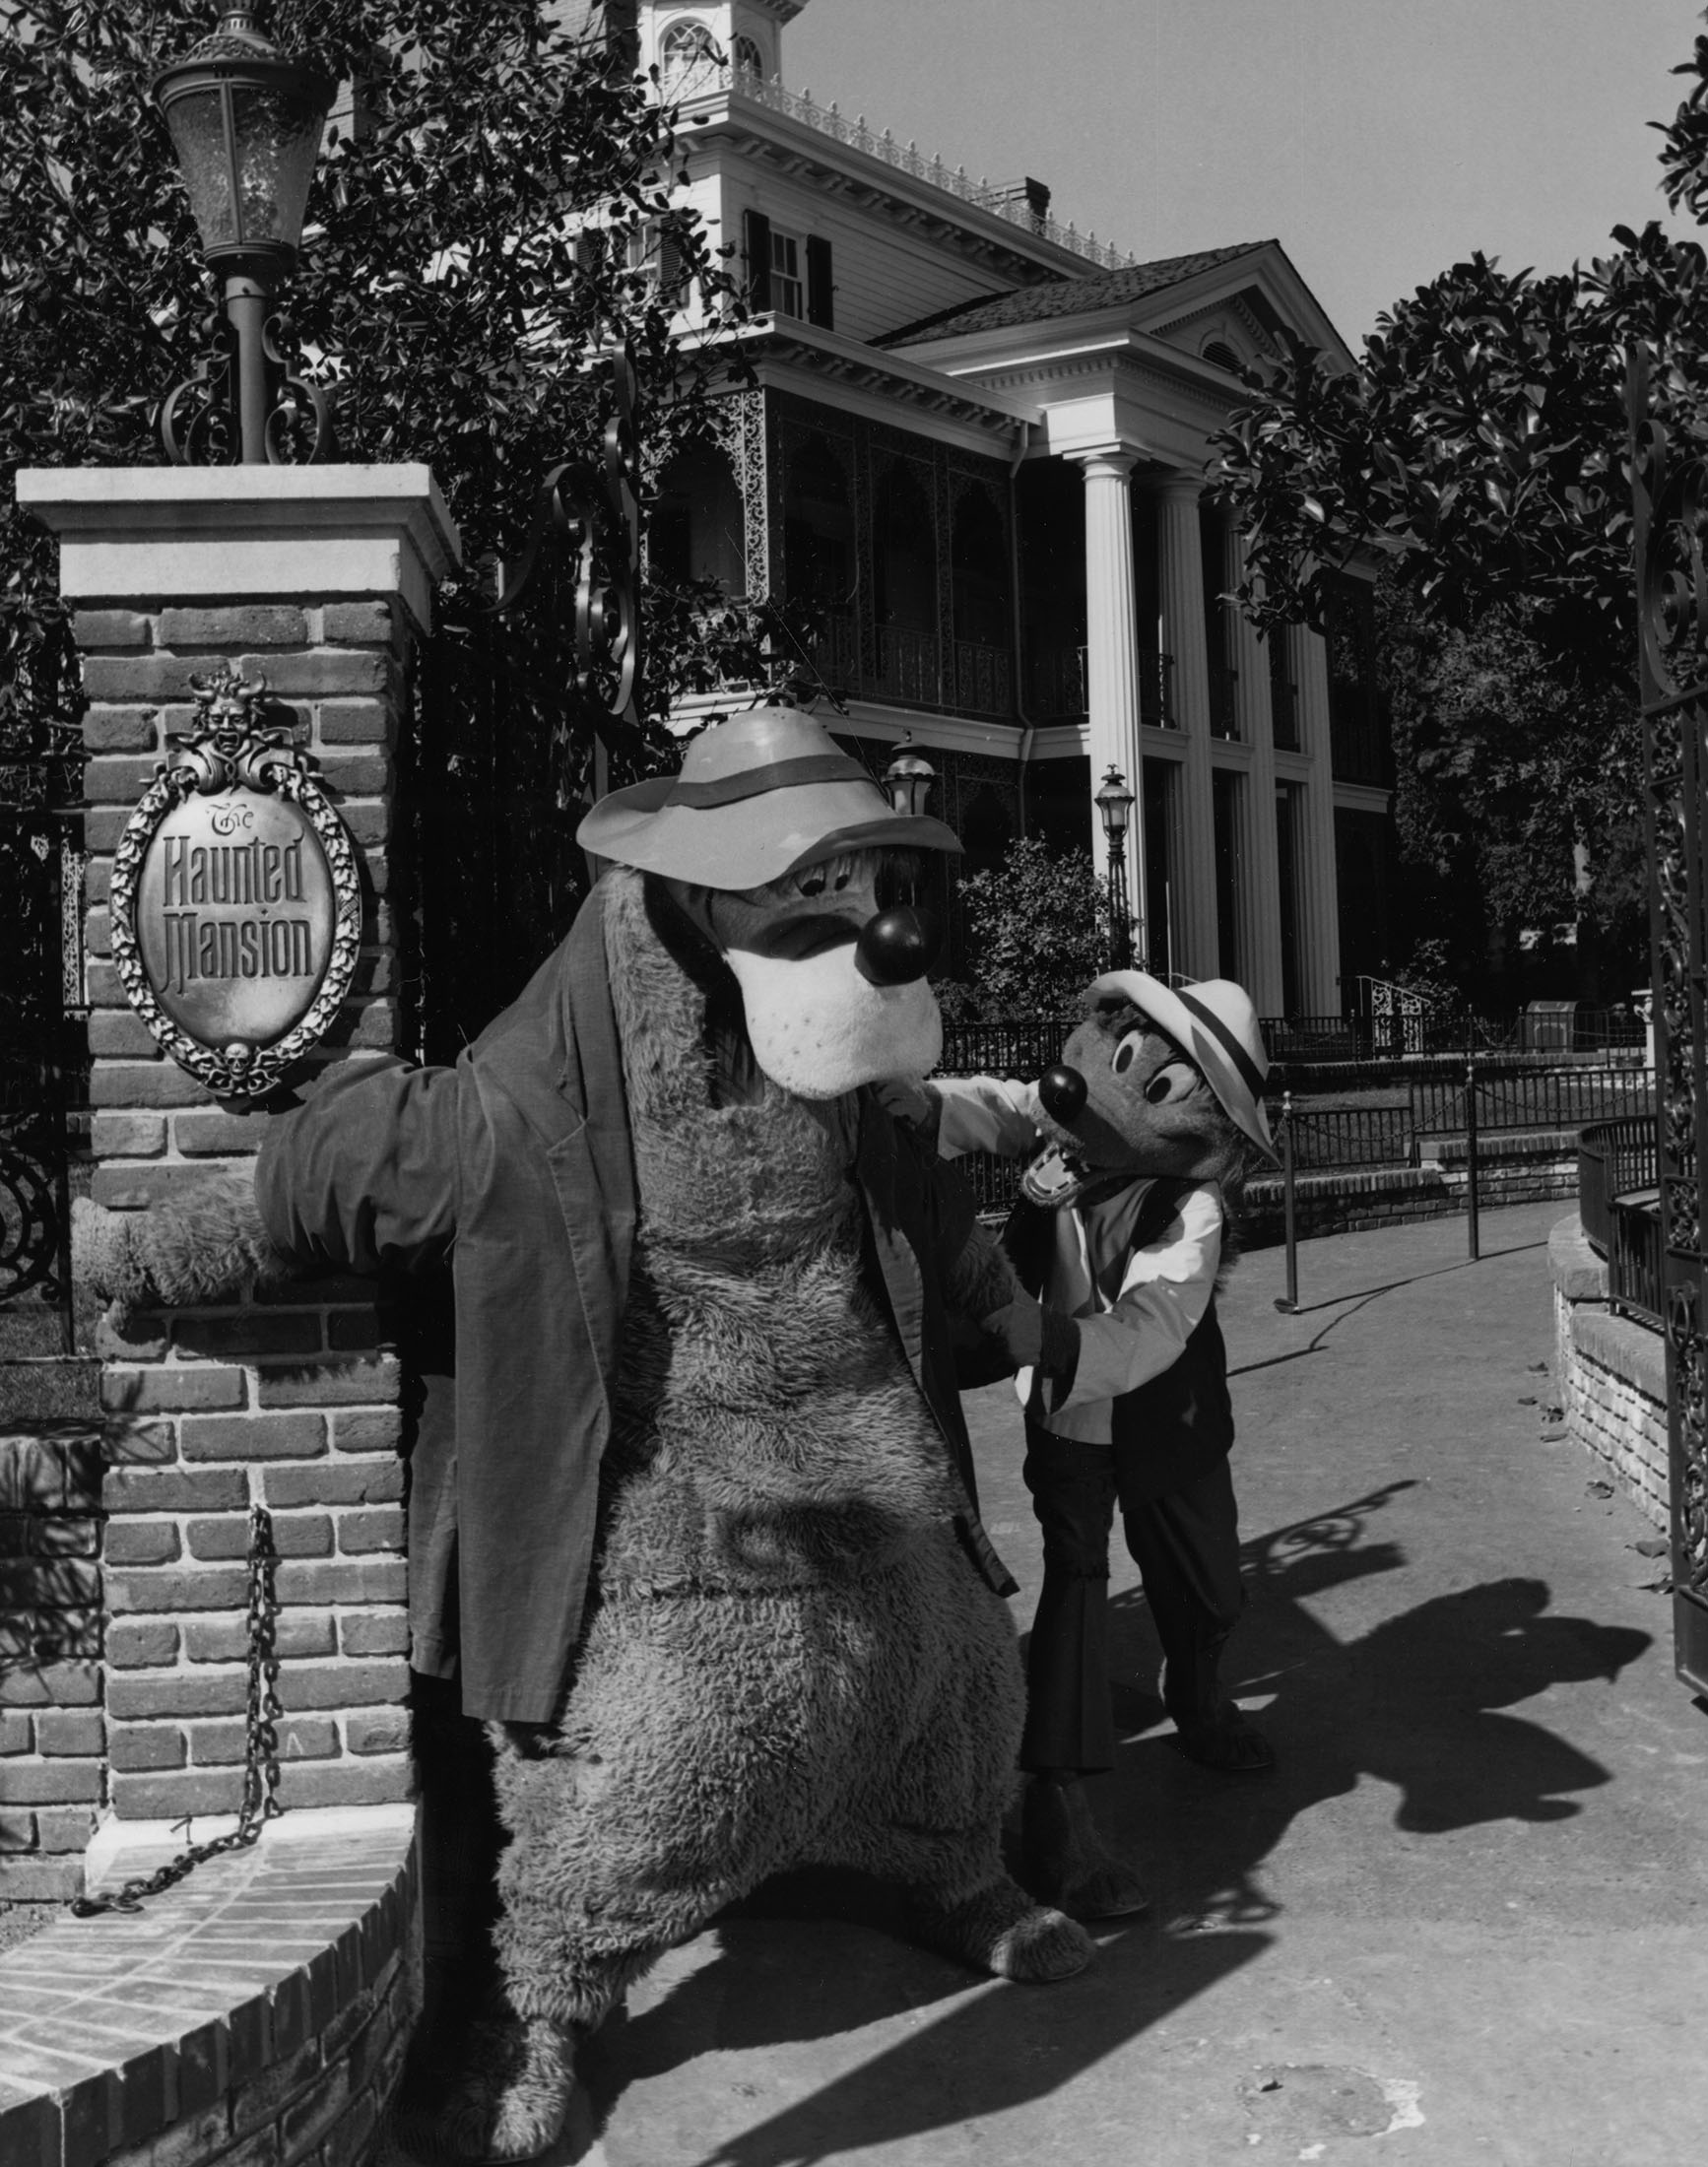 Br'er Bear and Br'er Fox outside the Haunted Mansion